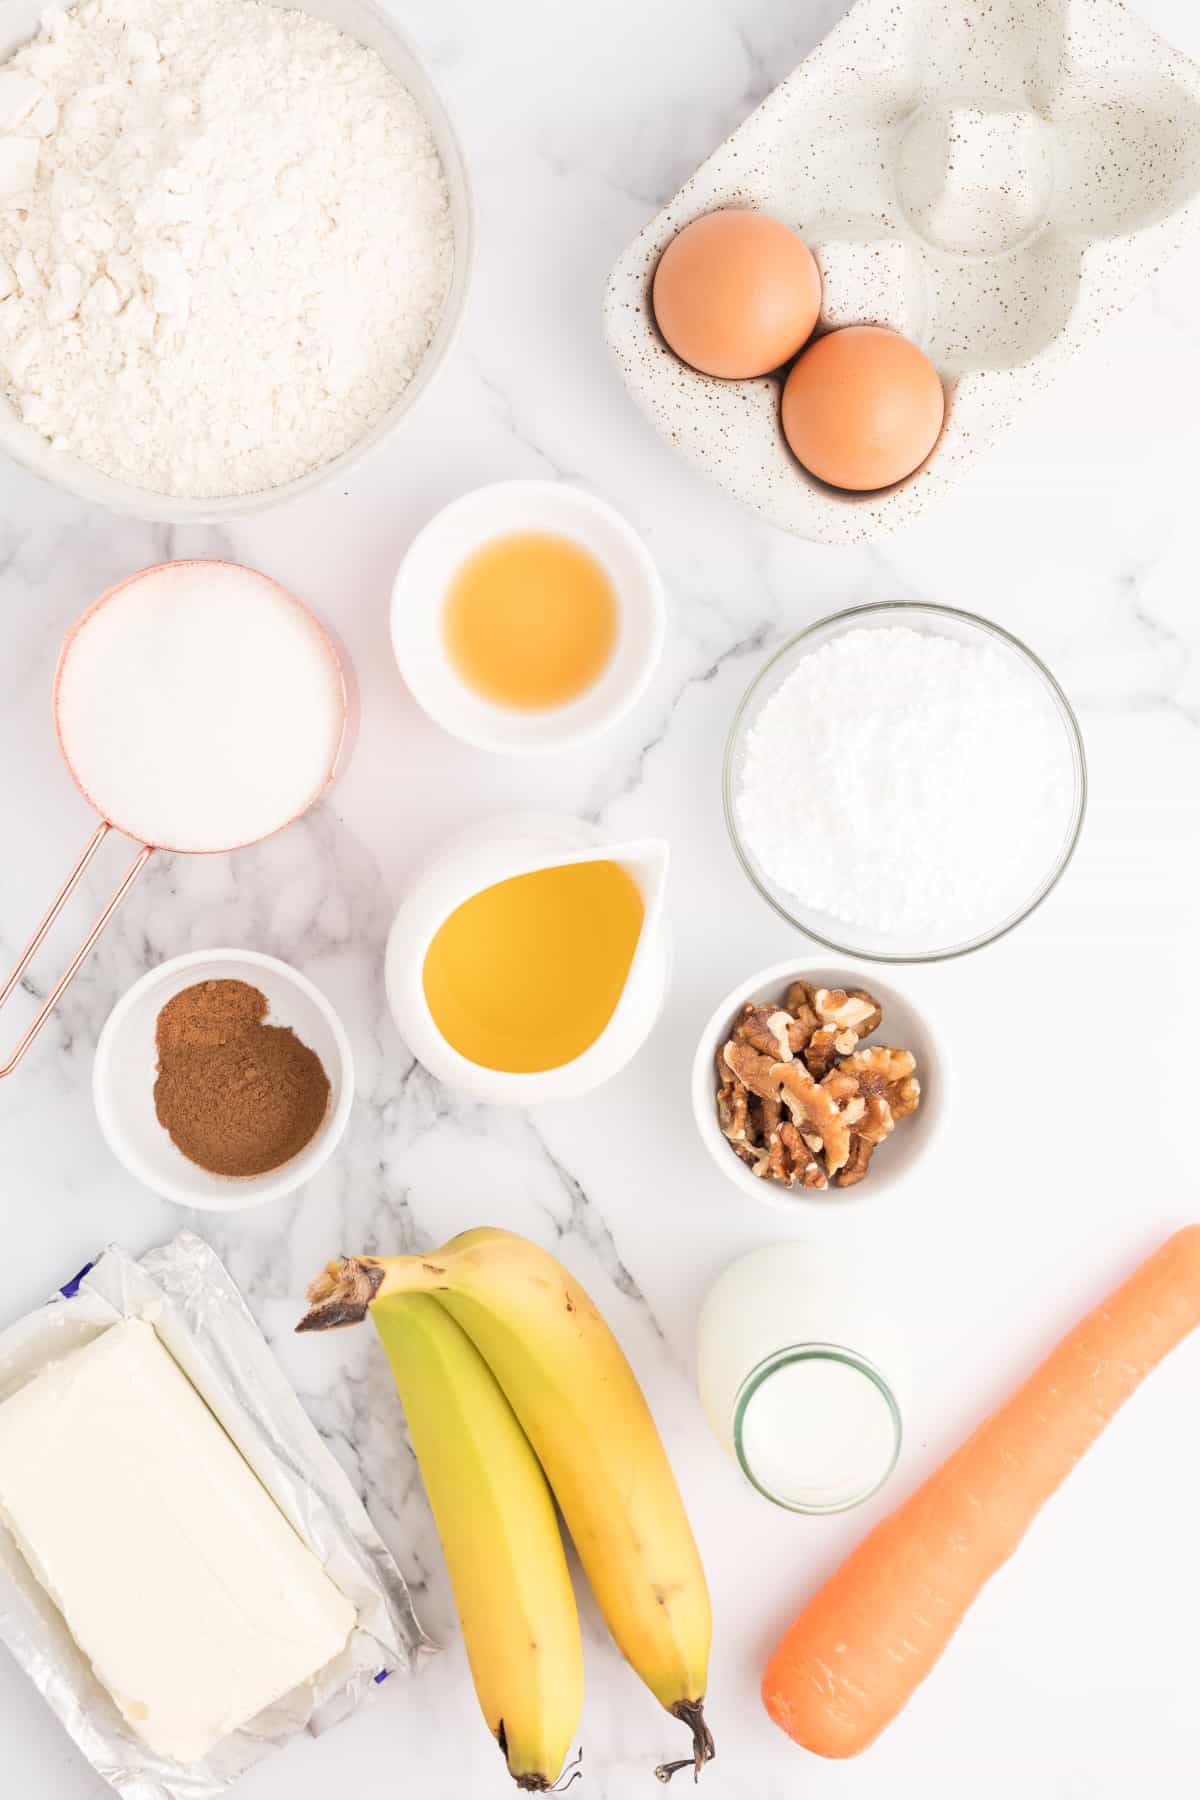 Ingredients for carrot cake banana bread. 